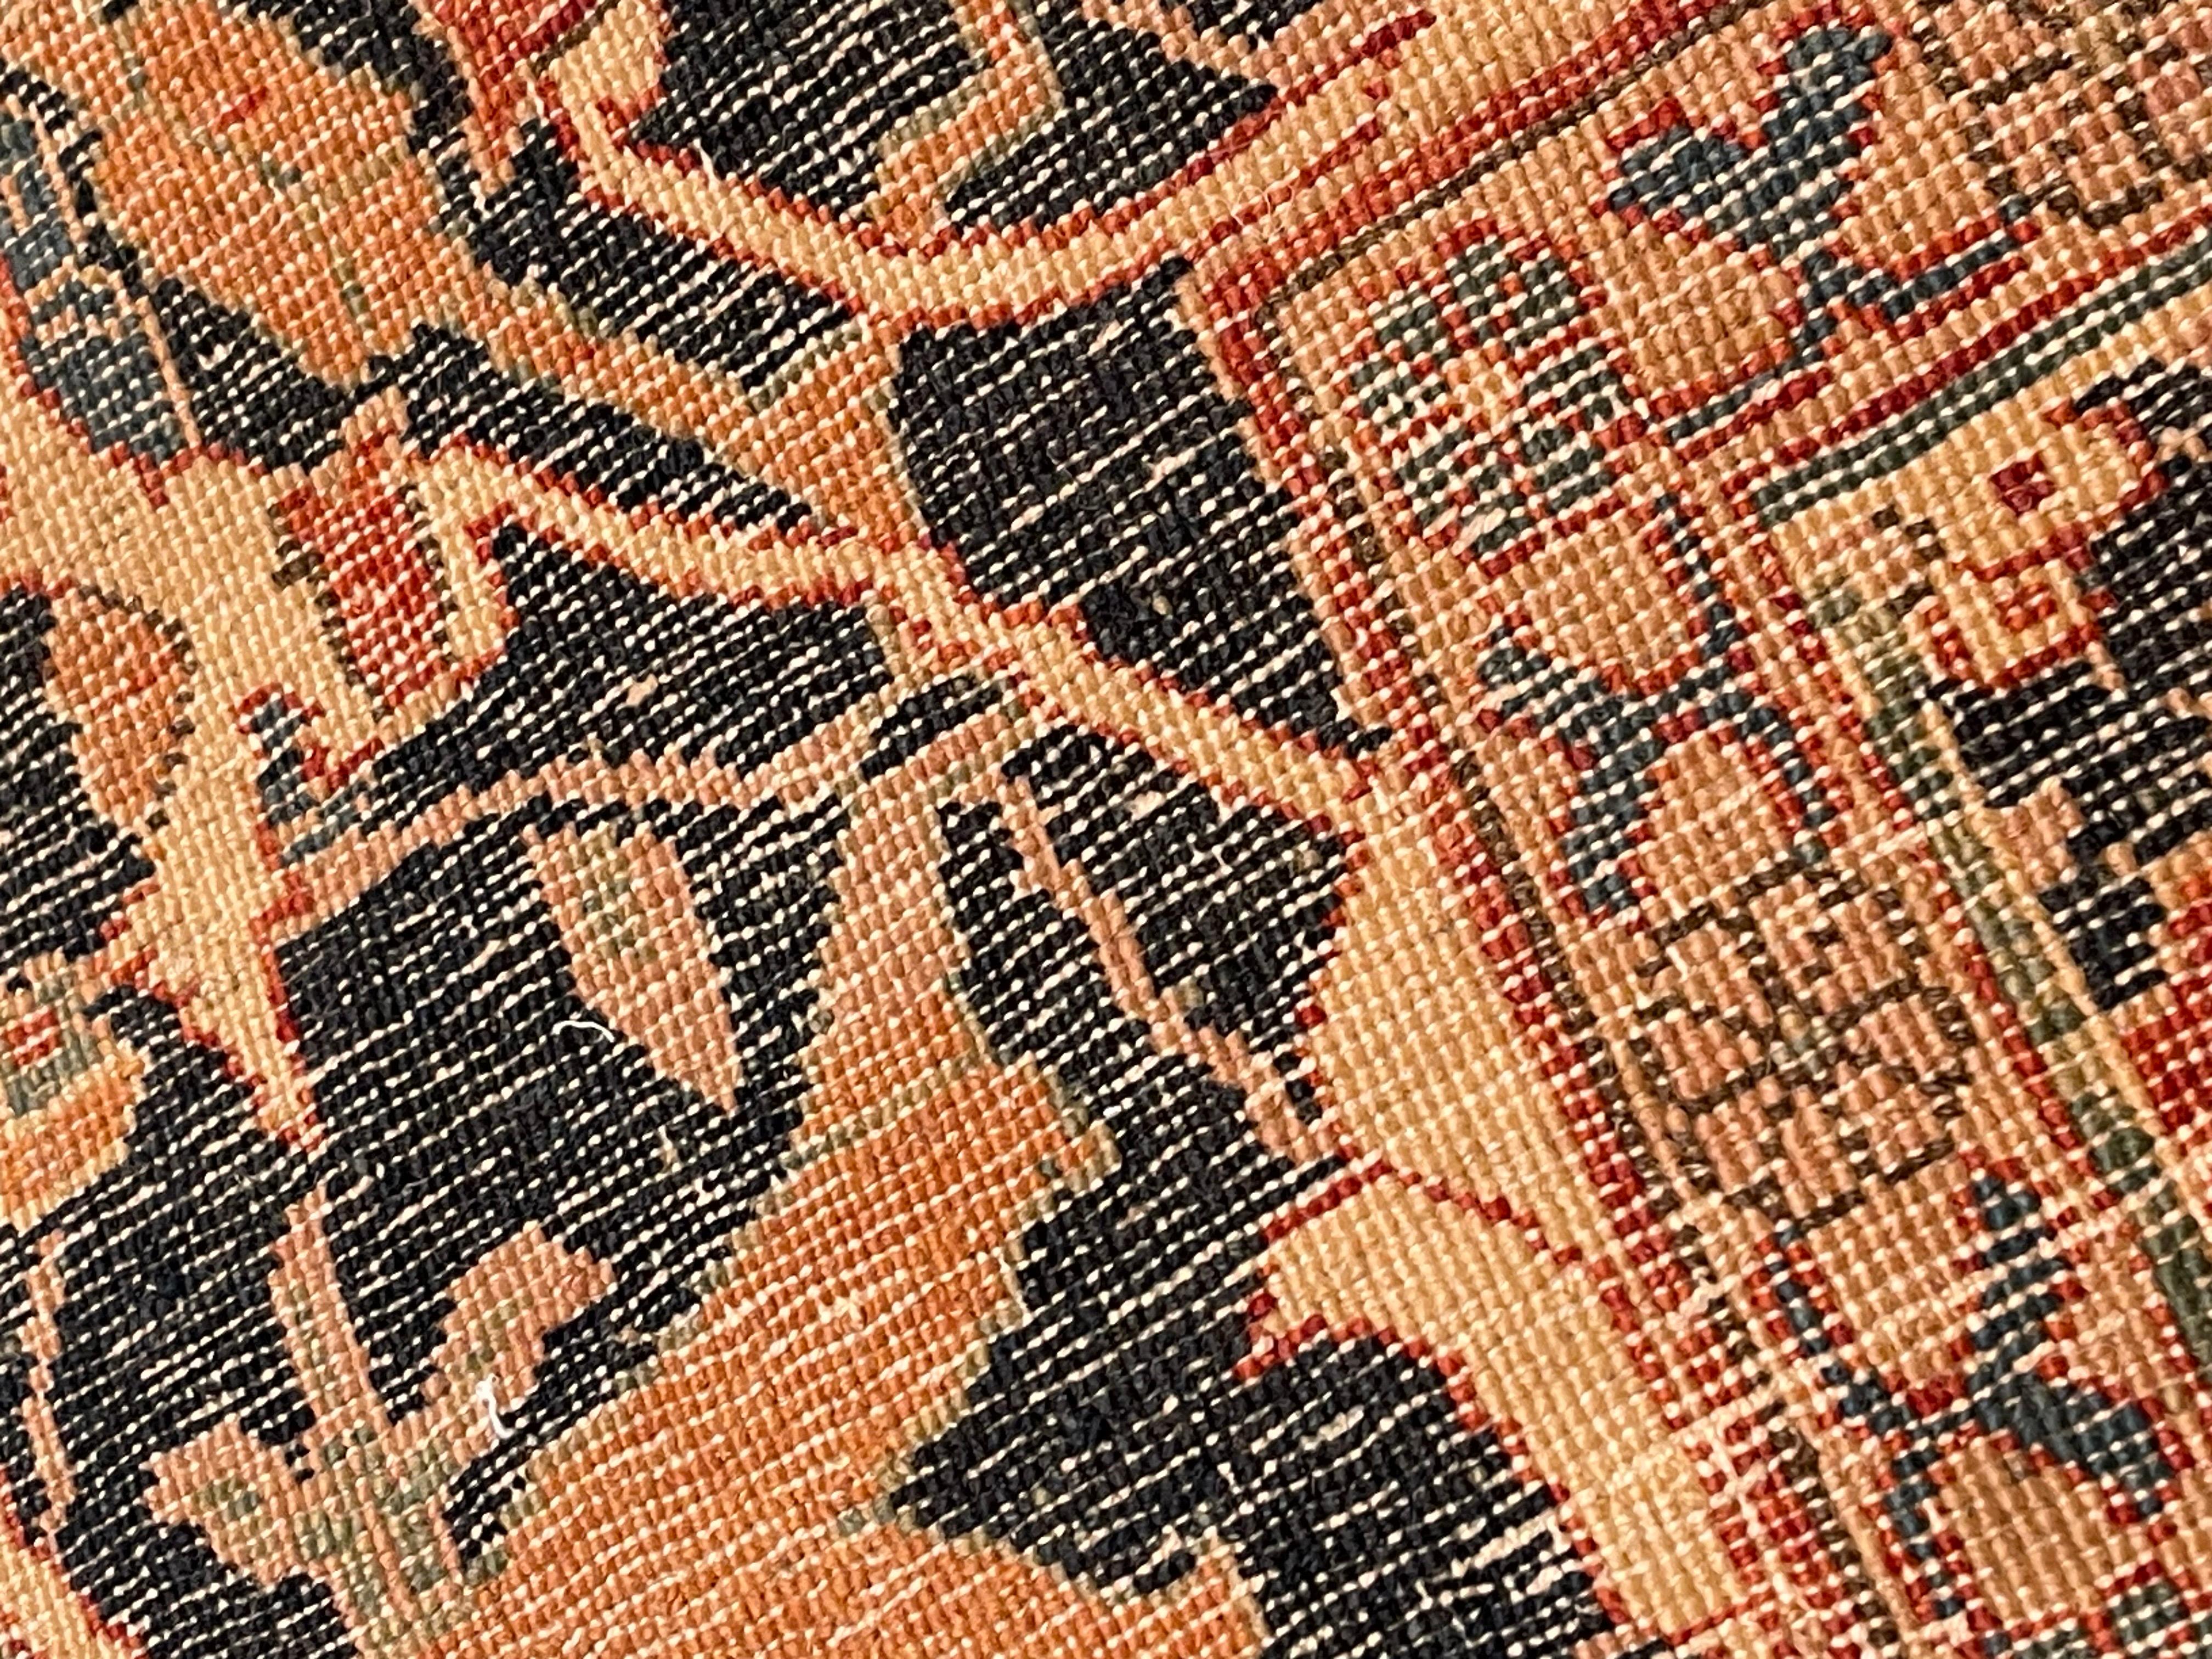 Contemporary Ararat Rugs Kerman Vase Technique Carpet 17th Century Revival Rug, Natural Dyed For Sale